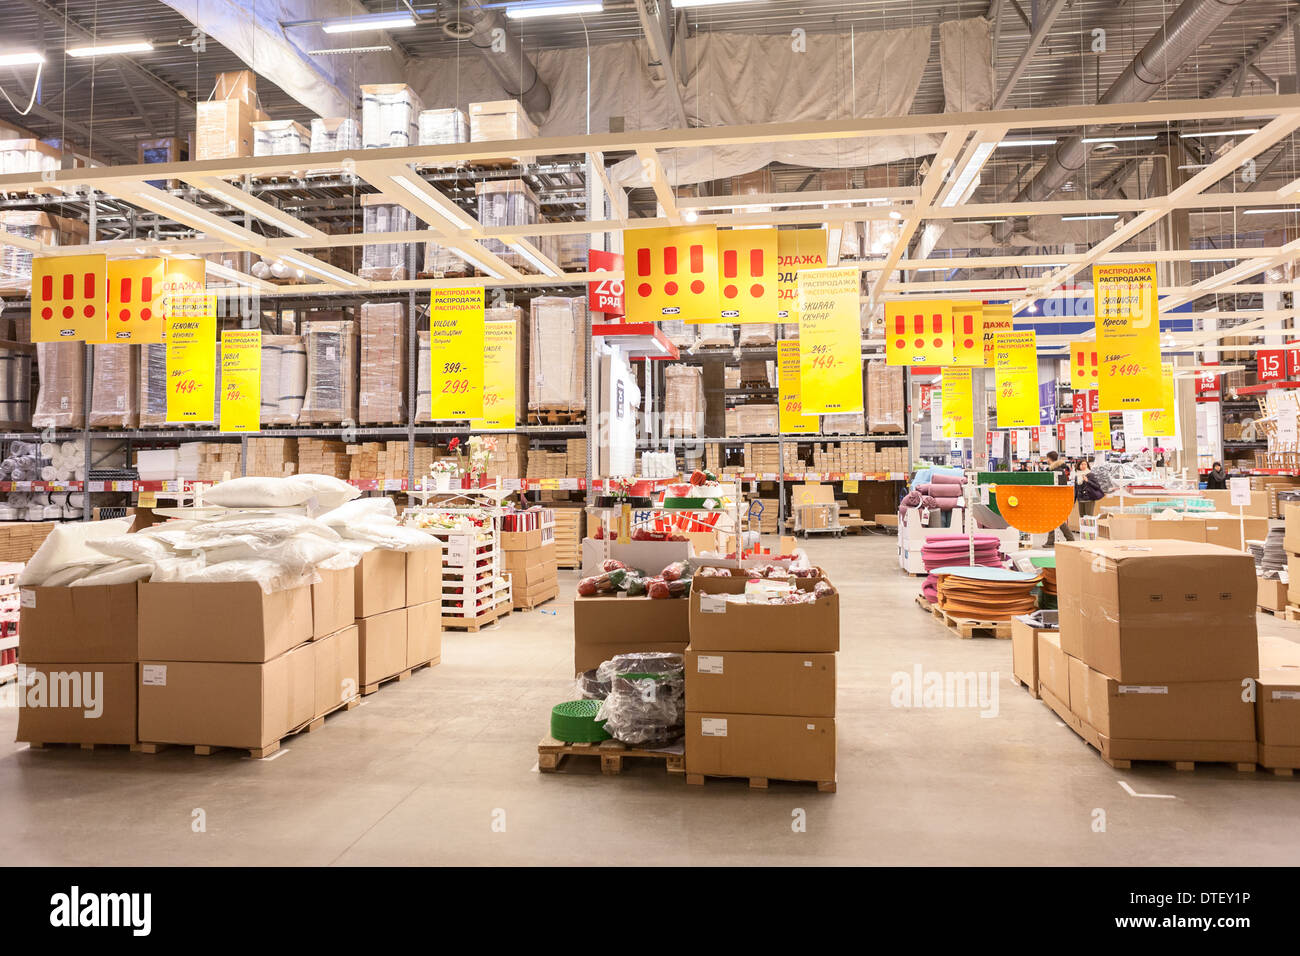 Ikea warehouse in wholesale store, Russia Stock Photo